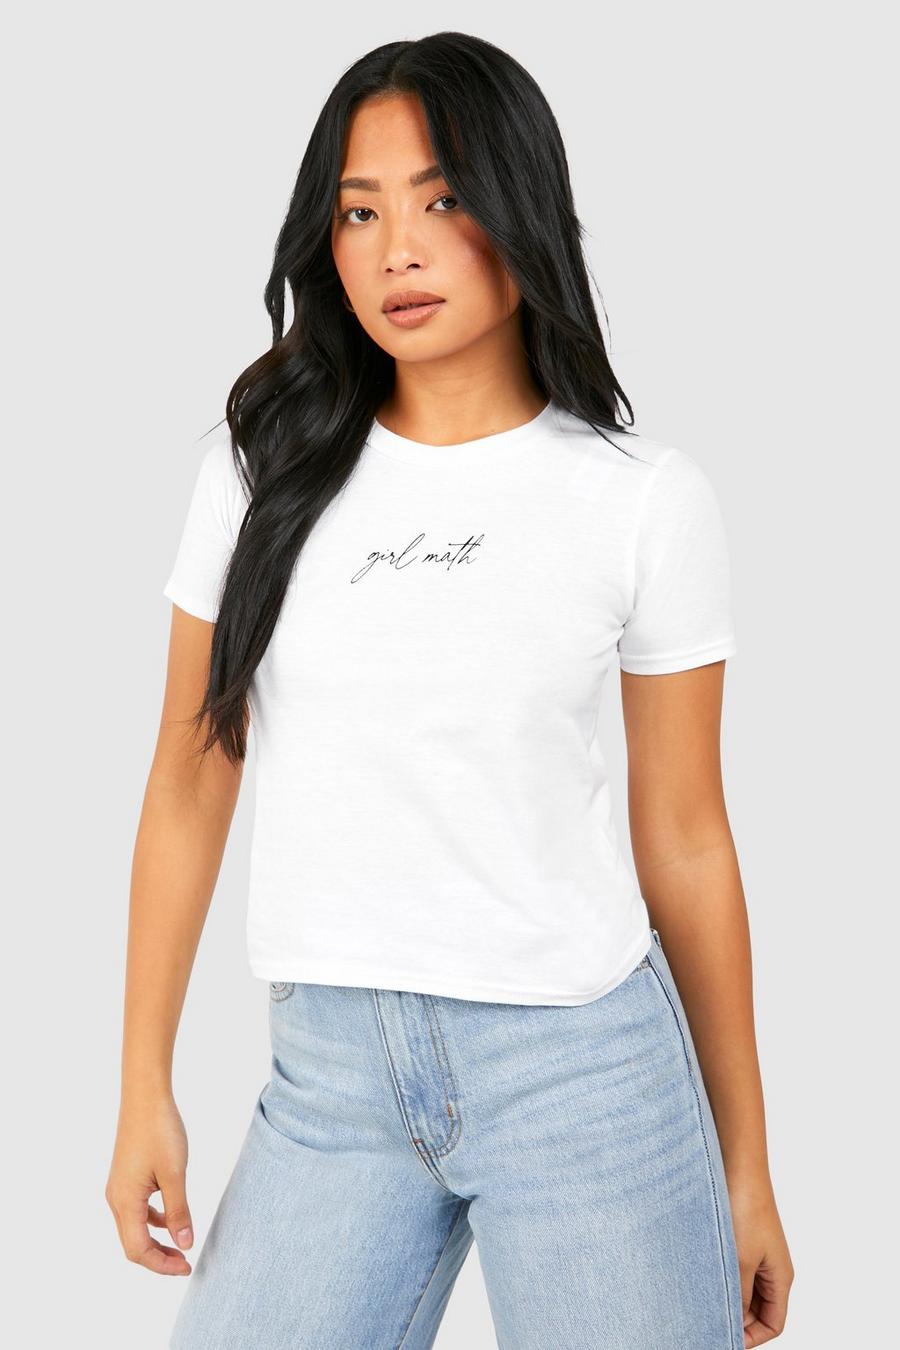 Camiseta Petite Girl Math Baby, White image number 1